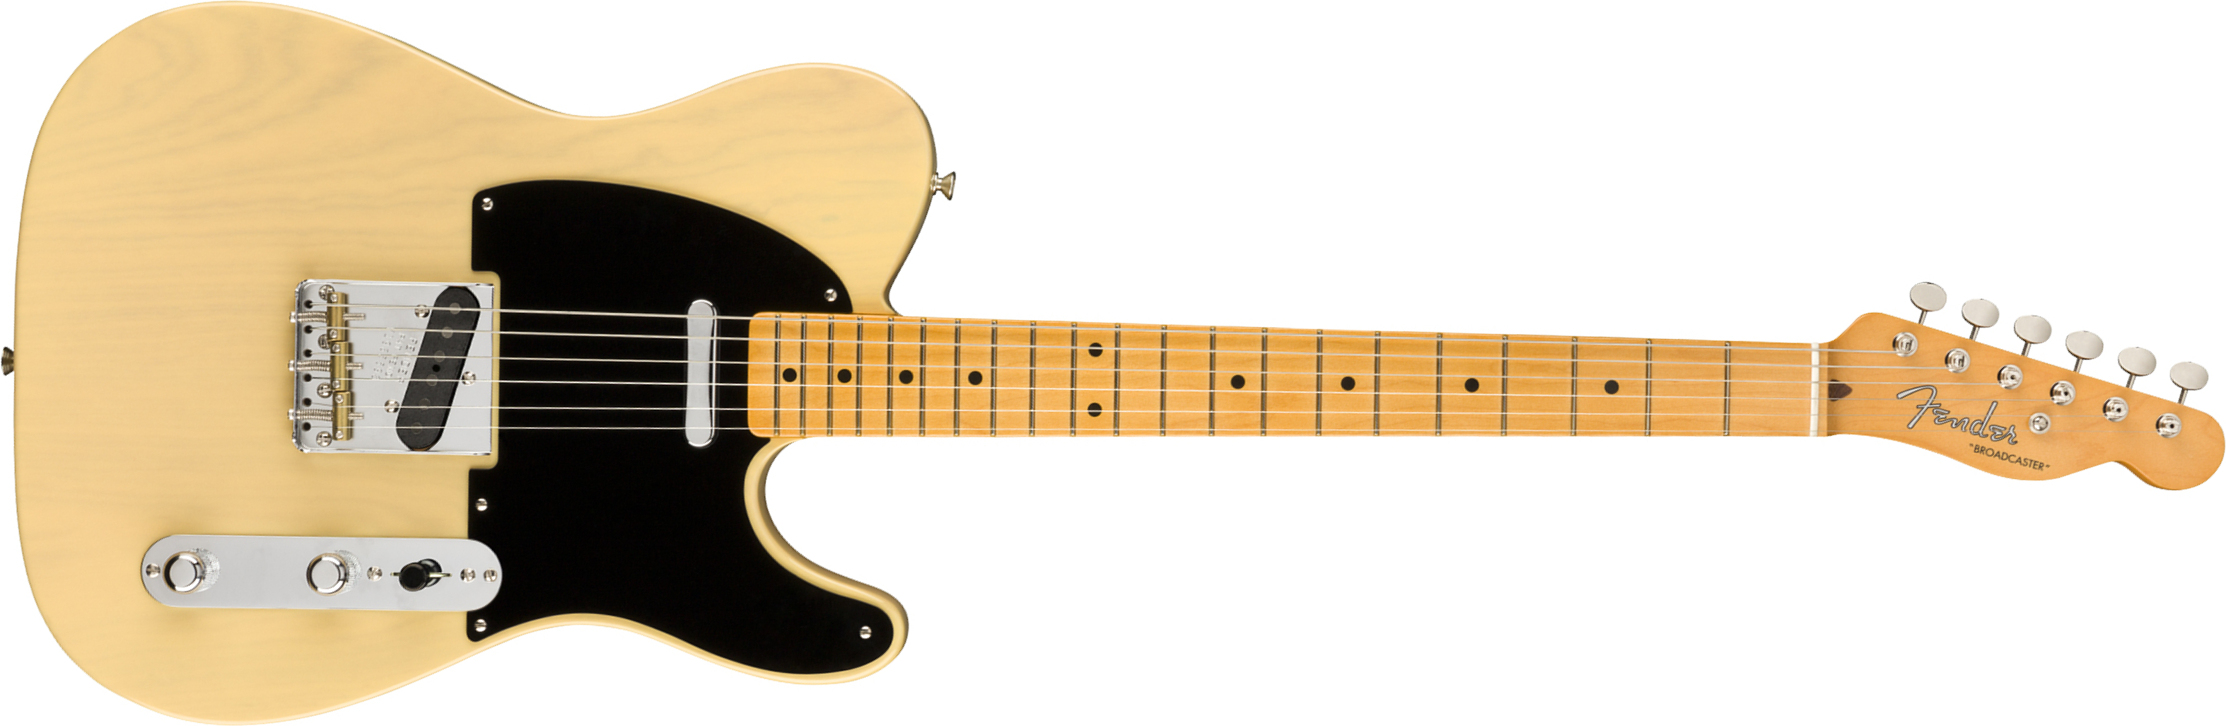 Fender Tele Broadcaster 70th Anniversary Usa Mn - Blackguard Blonde - Televorm elektrische gitaar - Main picture